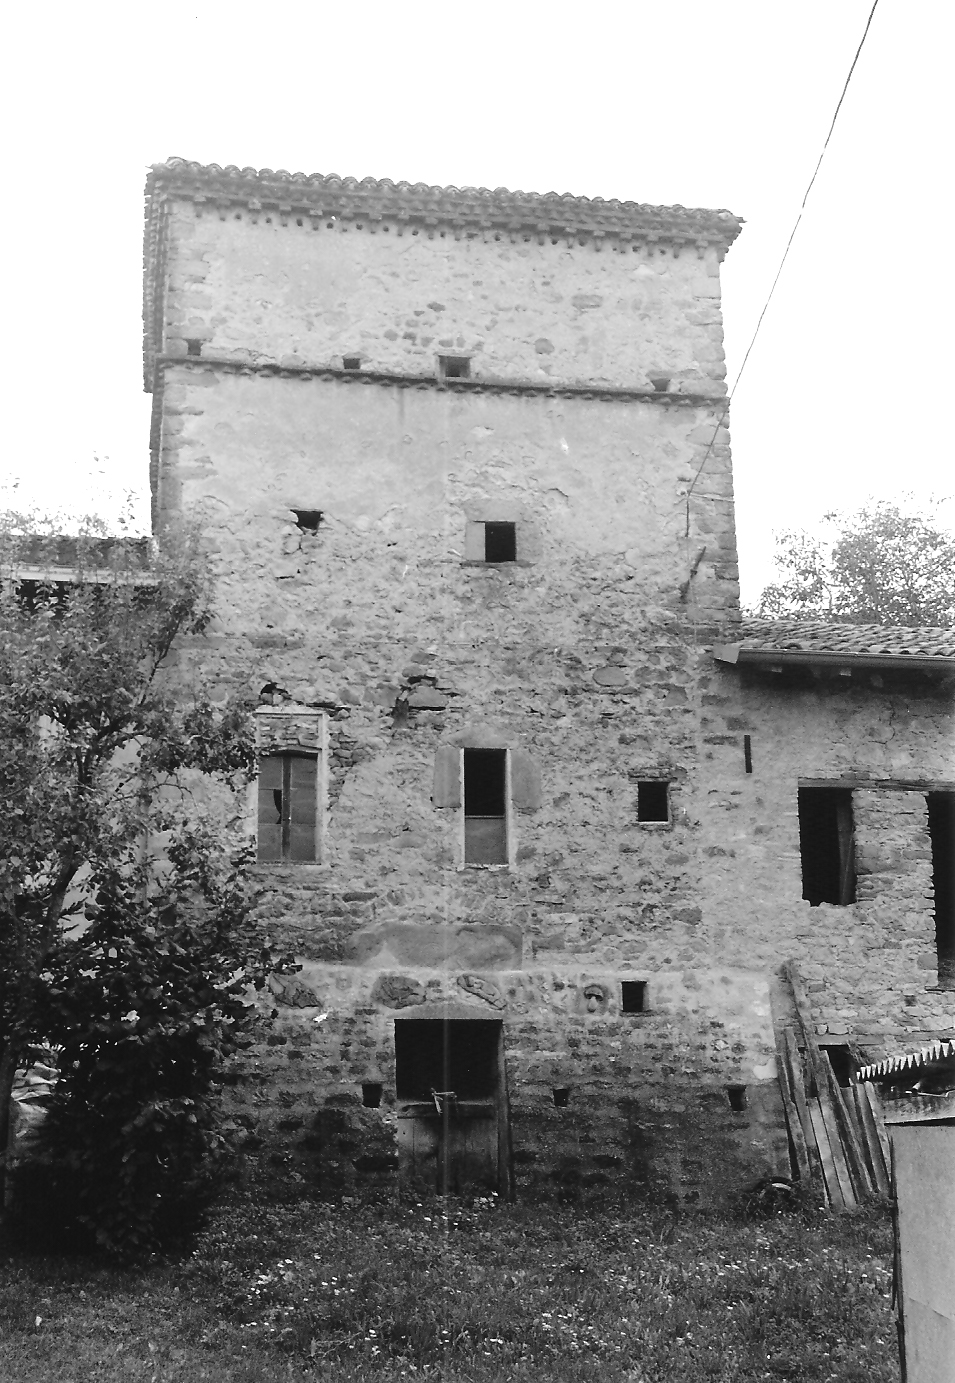 Casa Landini (casa-torre, rurale) - Castelnovo ne' Monti (RE)  (sec. XVI)